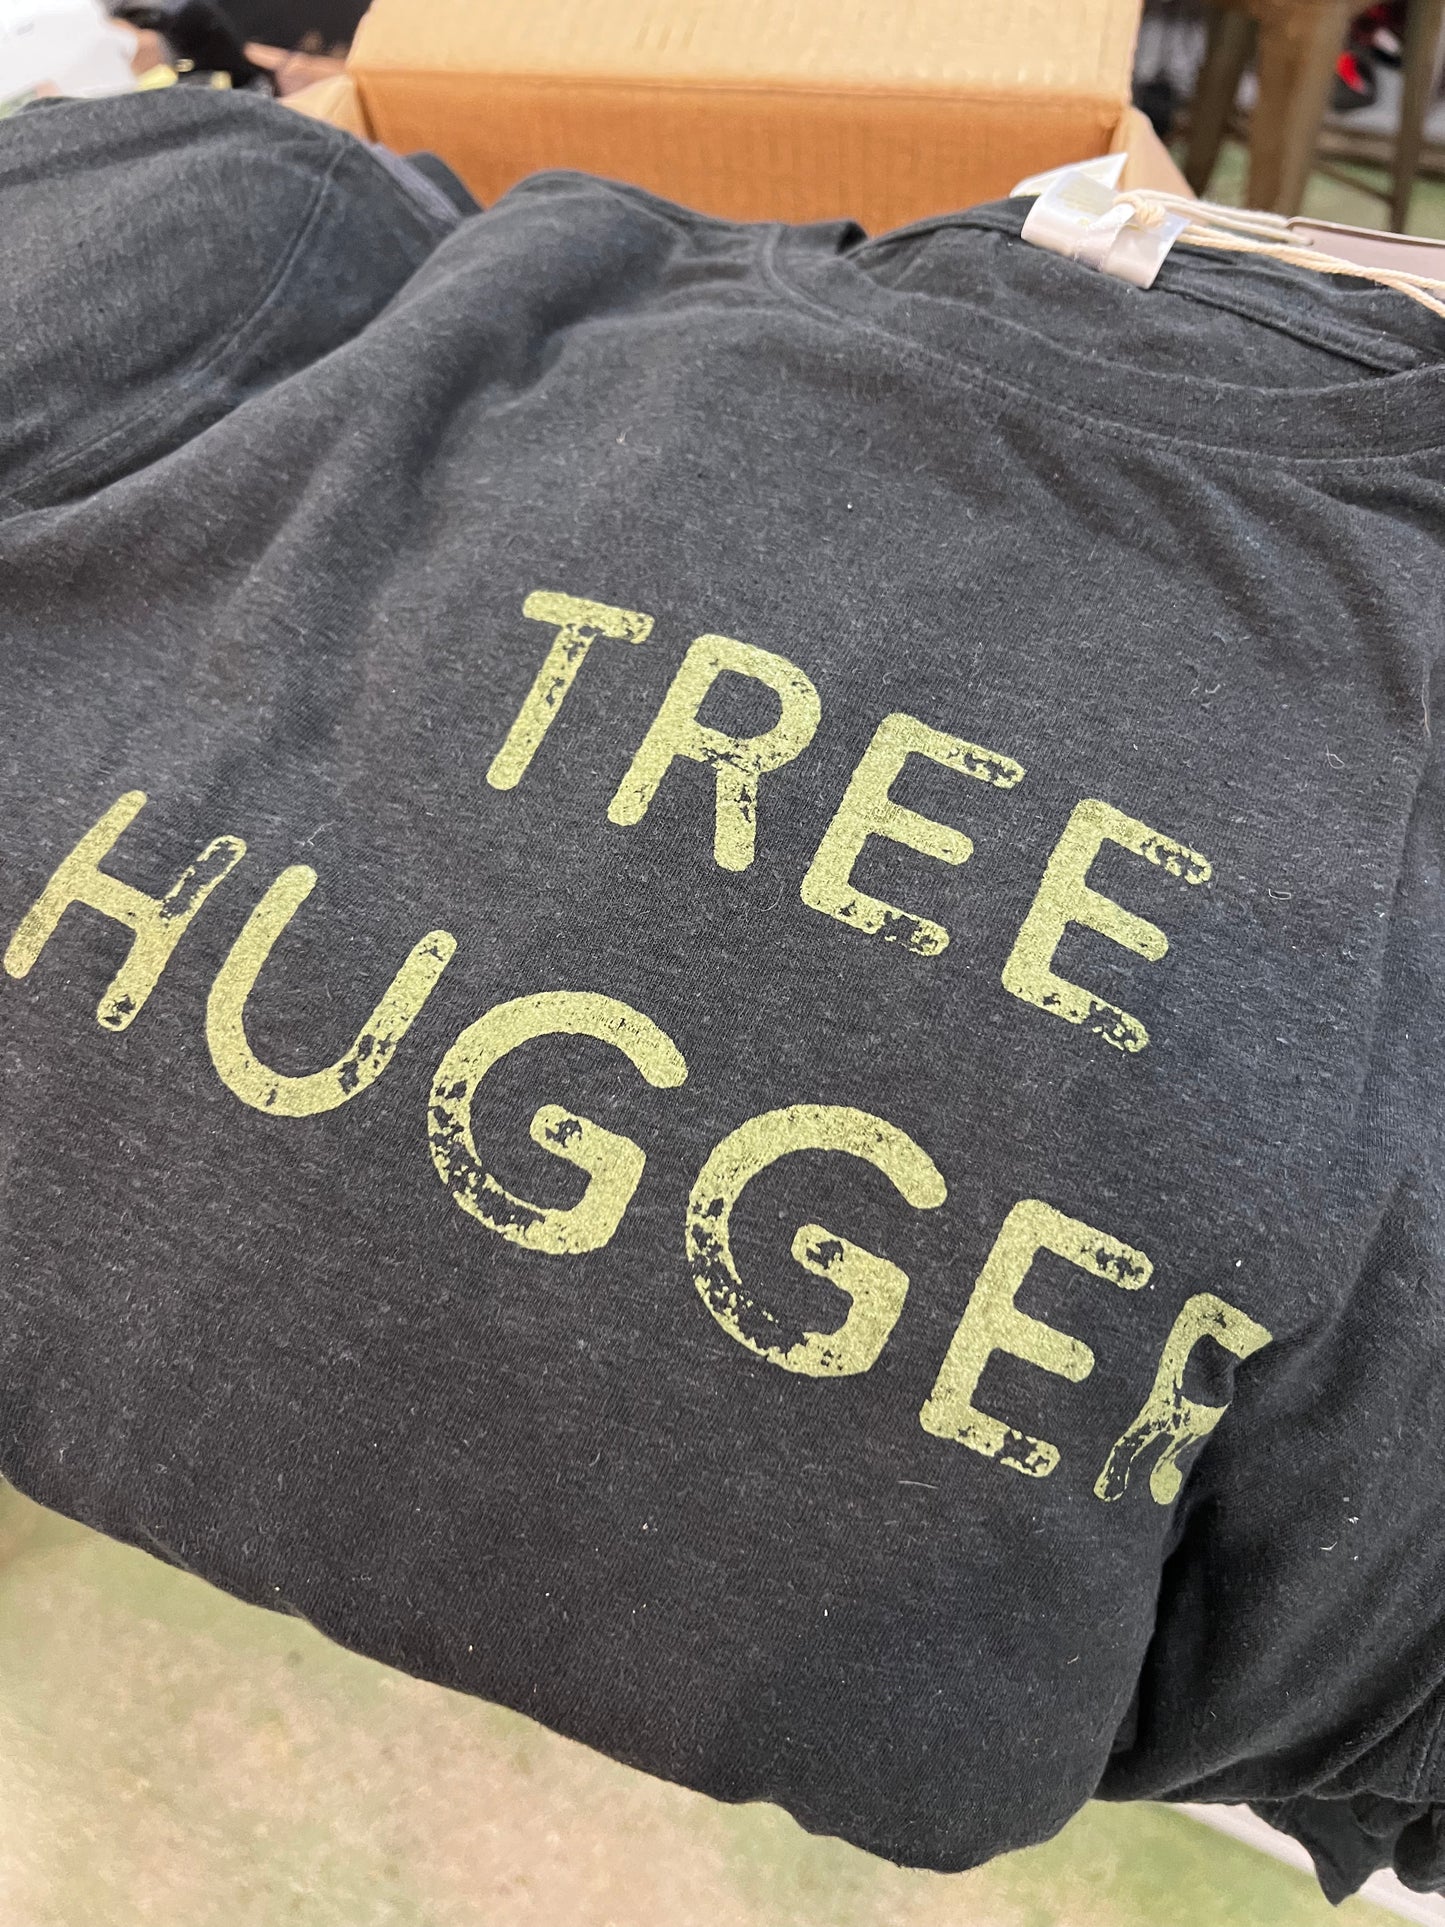 "Tree Hugger" Santa Barbara Hives T-shirt